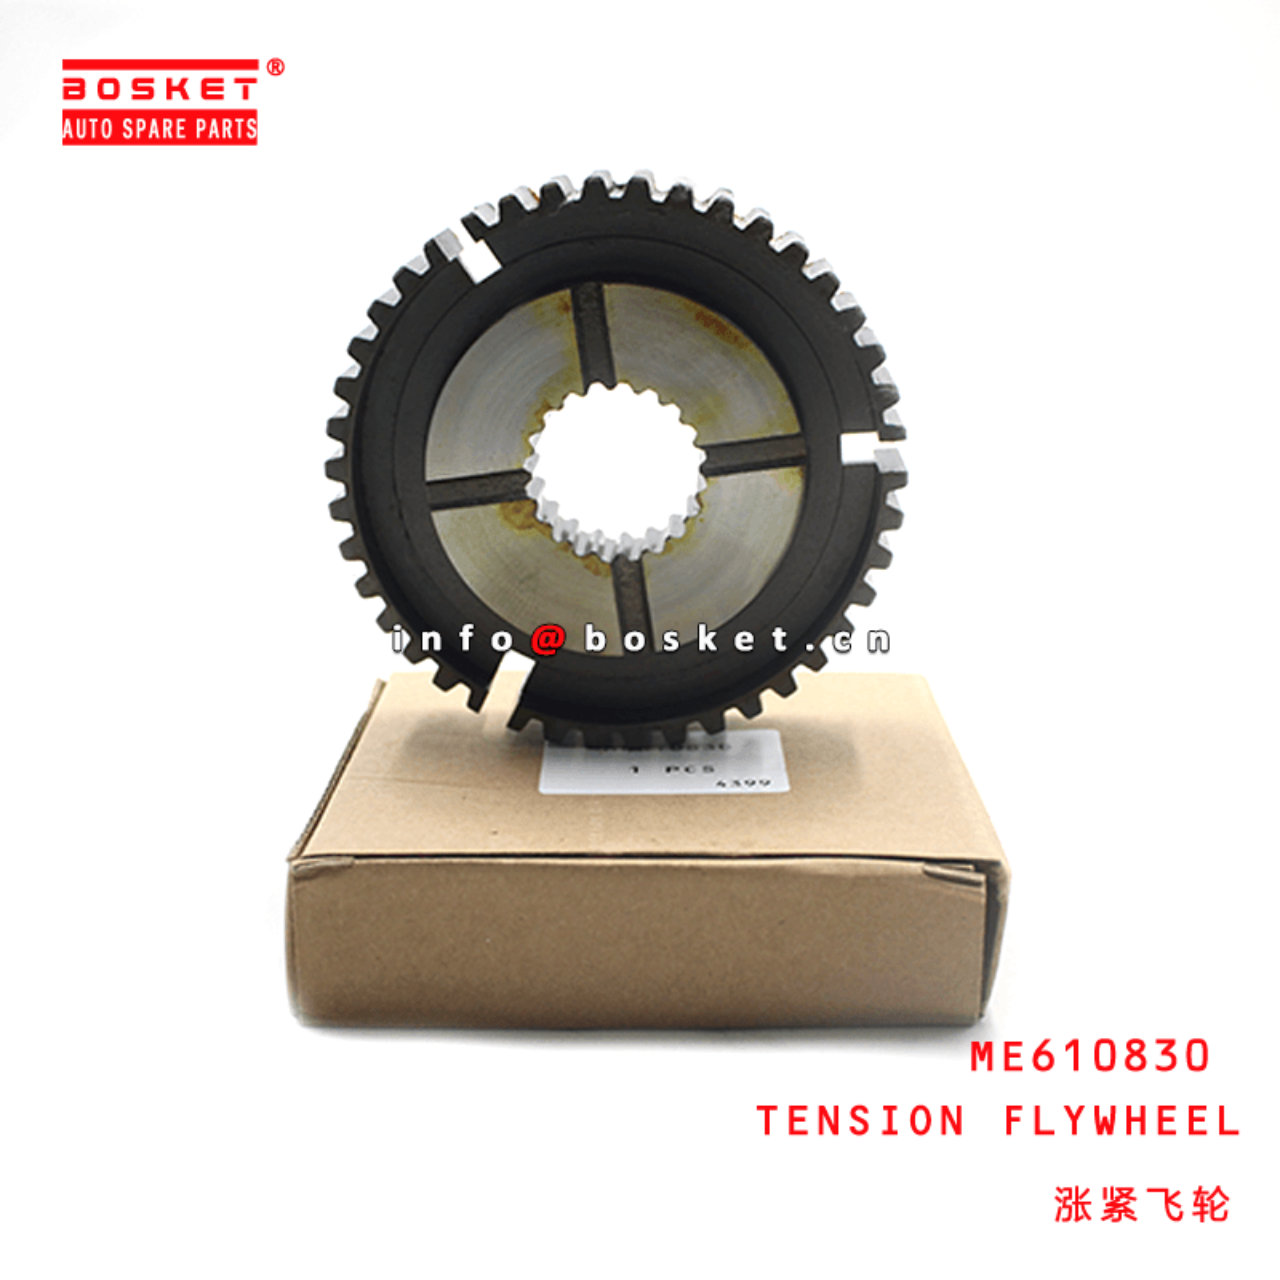 ME610830 Tension Flywheel Suitable For MITSUBISHI FUSO 